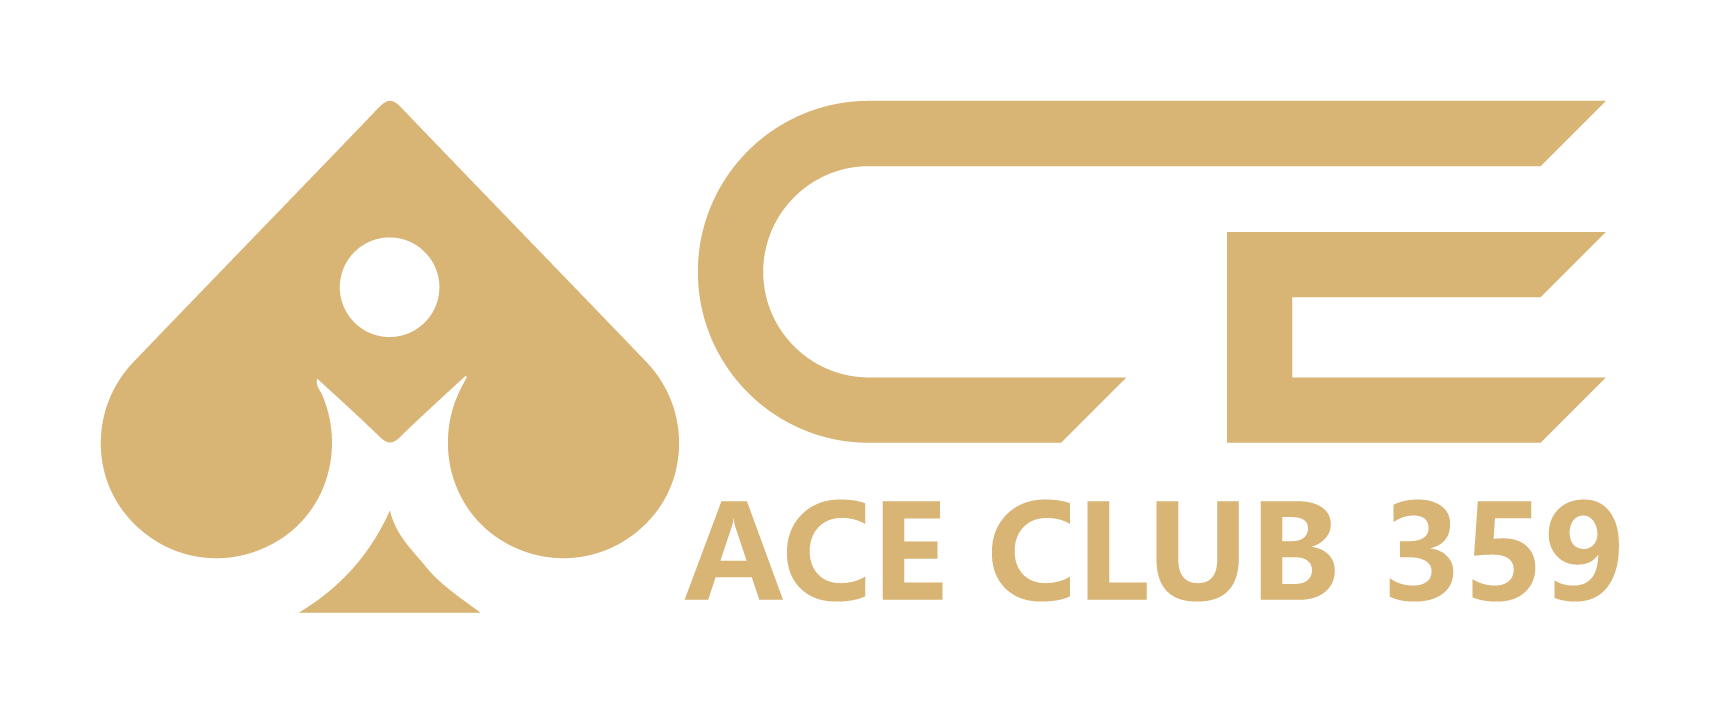 ACE CLUB 359